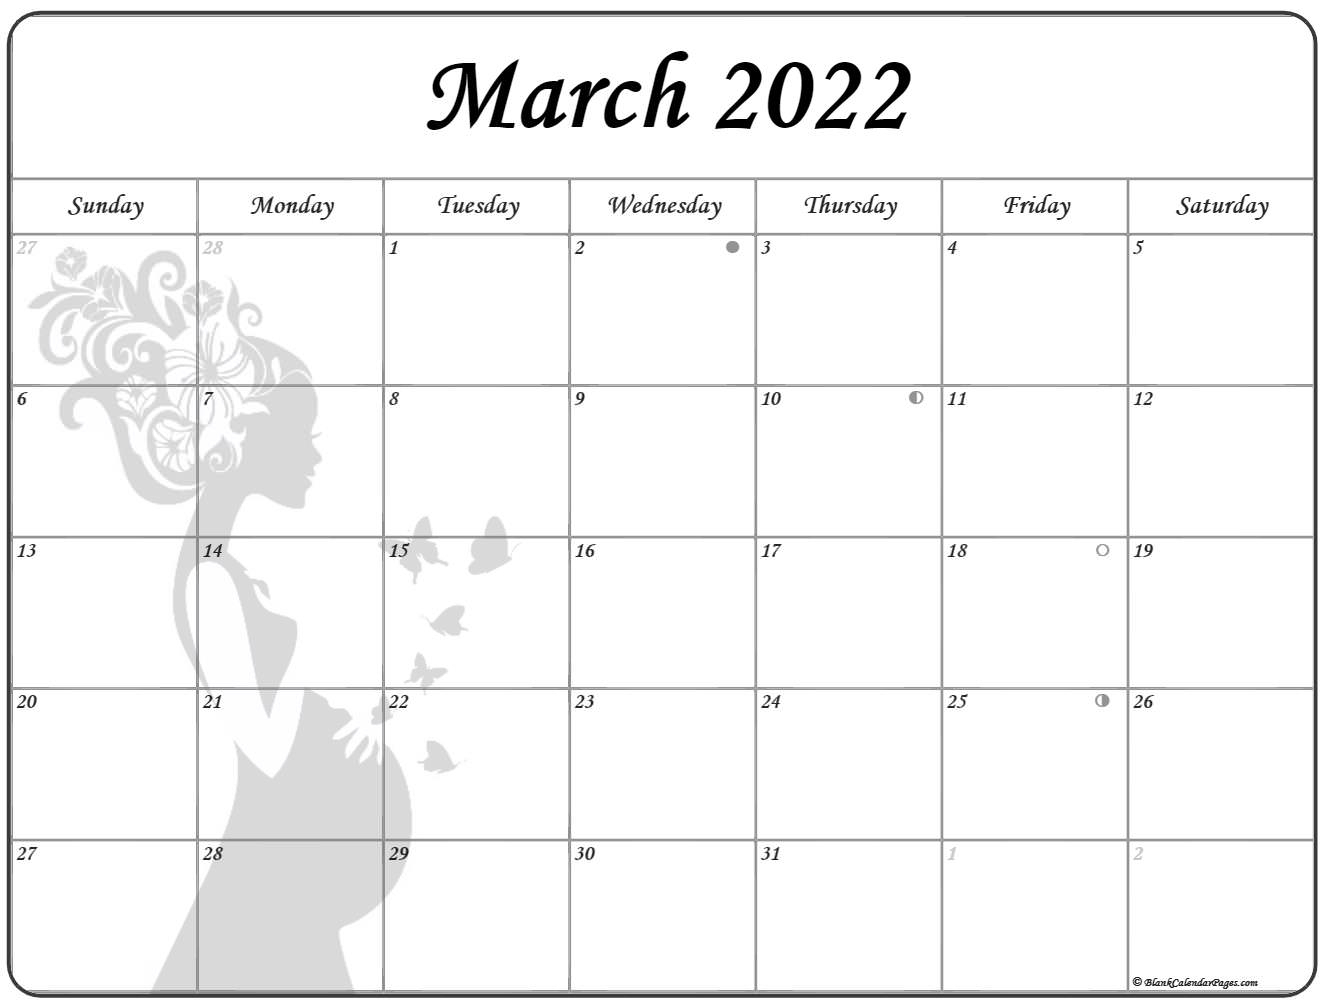 March 2022 Pregnancy Calendar | Fertility Calendar